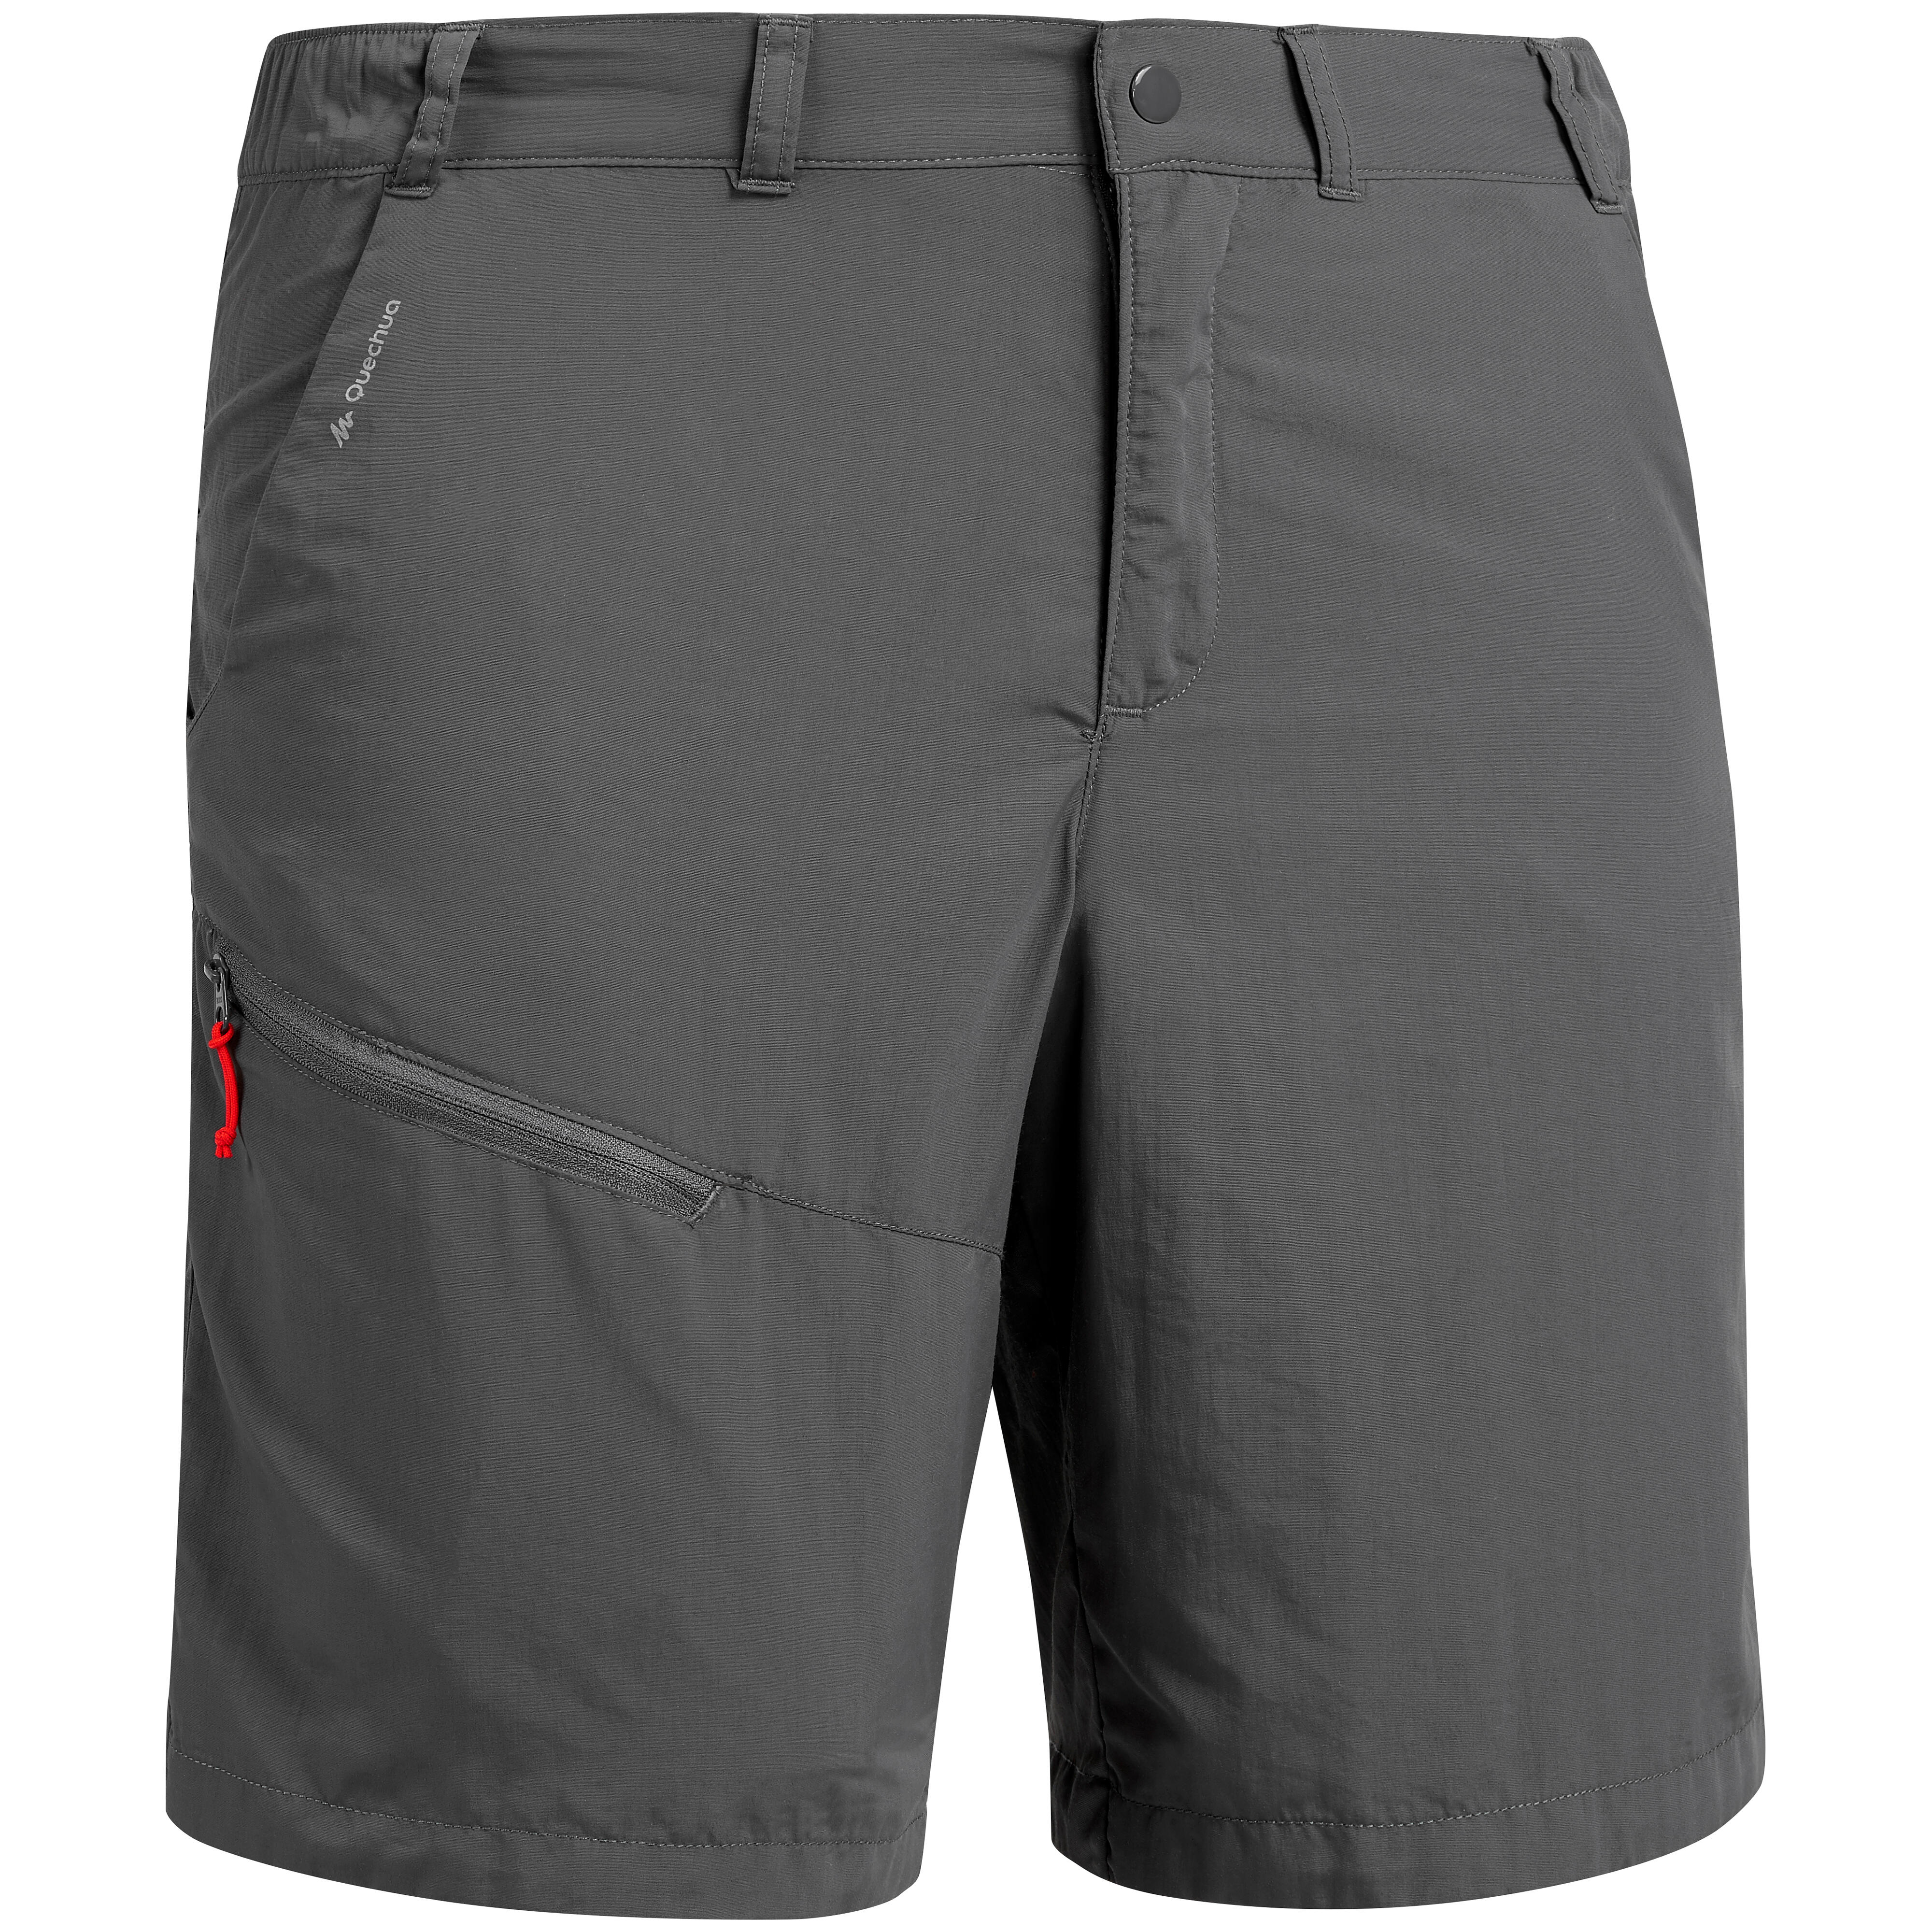 Men’s Hiking Shorts MH100 – Charcoal Grey